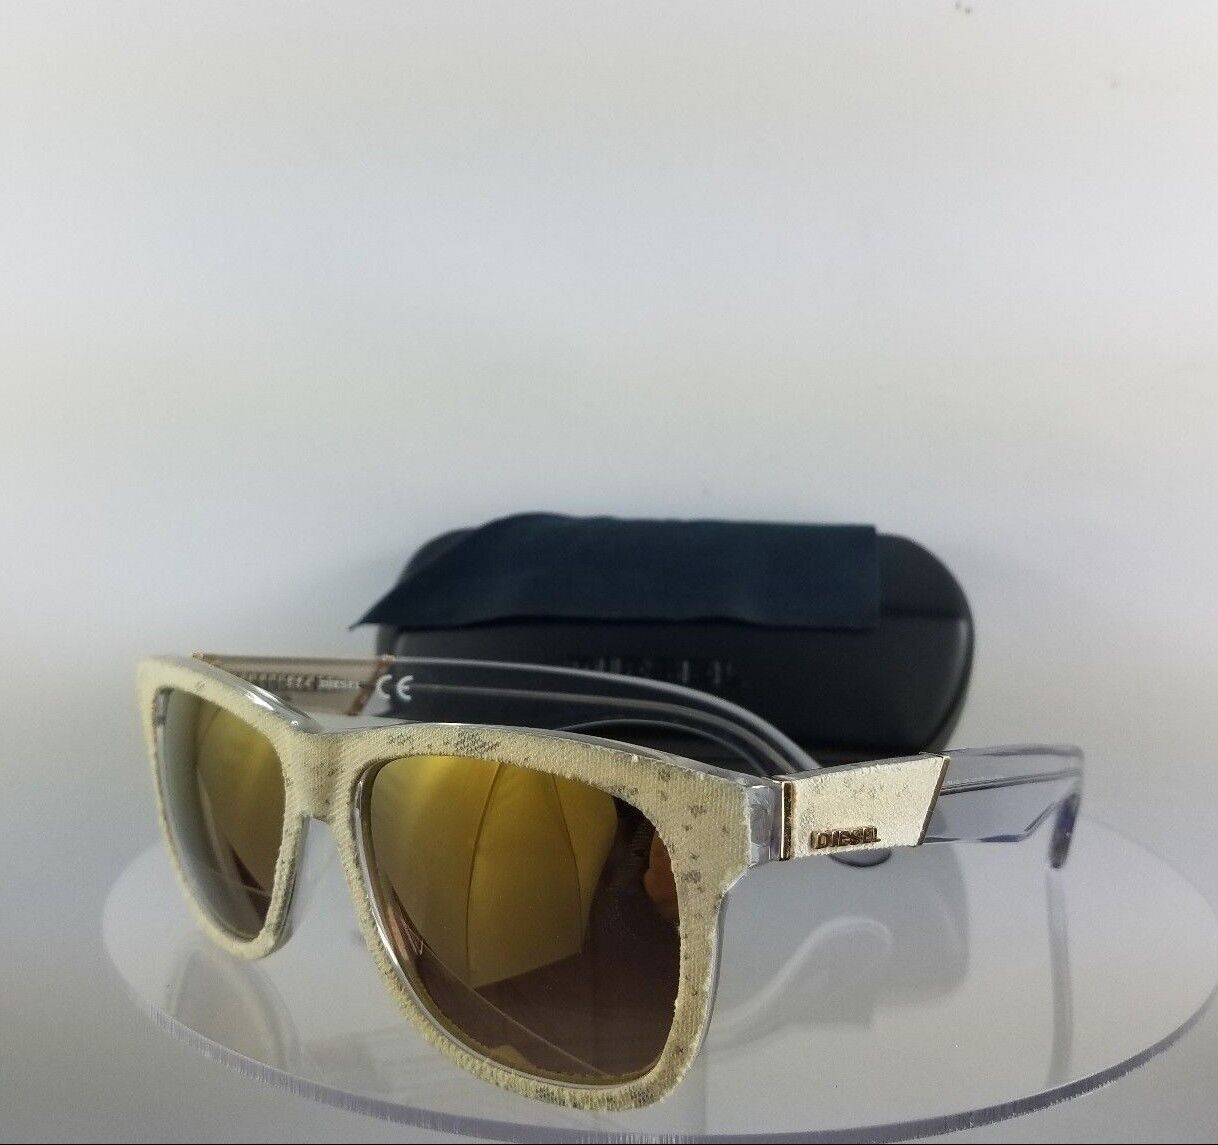 Brand Authentic Brand New Diesel Sunglasses DL 0140-F Col. 27L 56mm #Denimeye